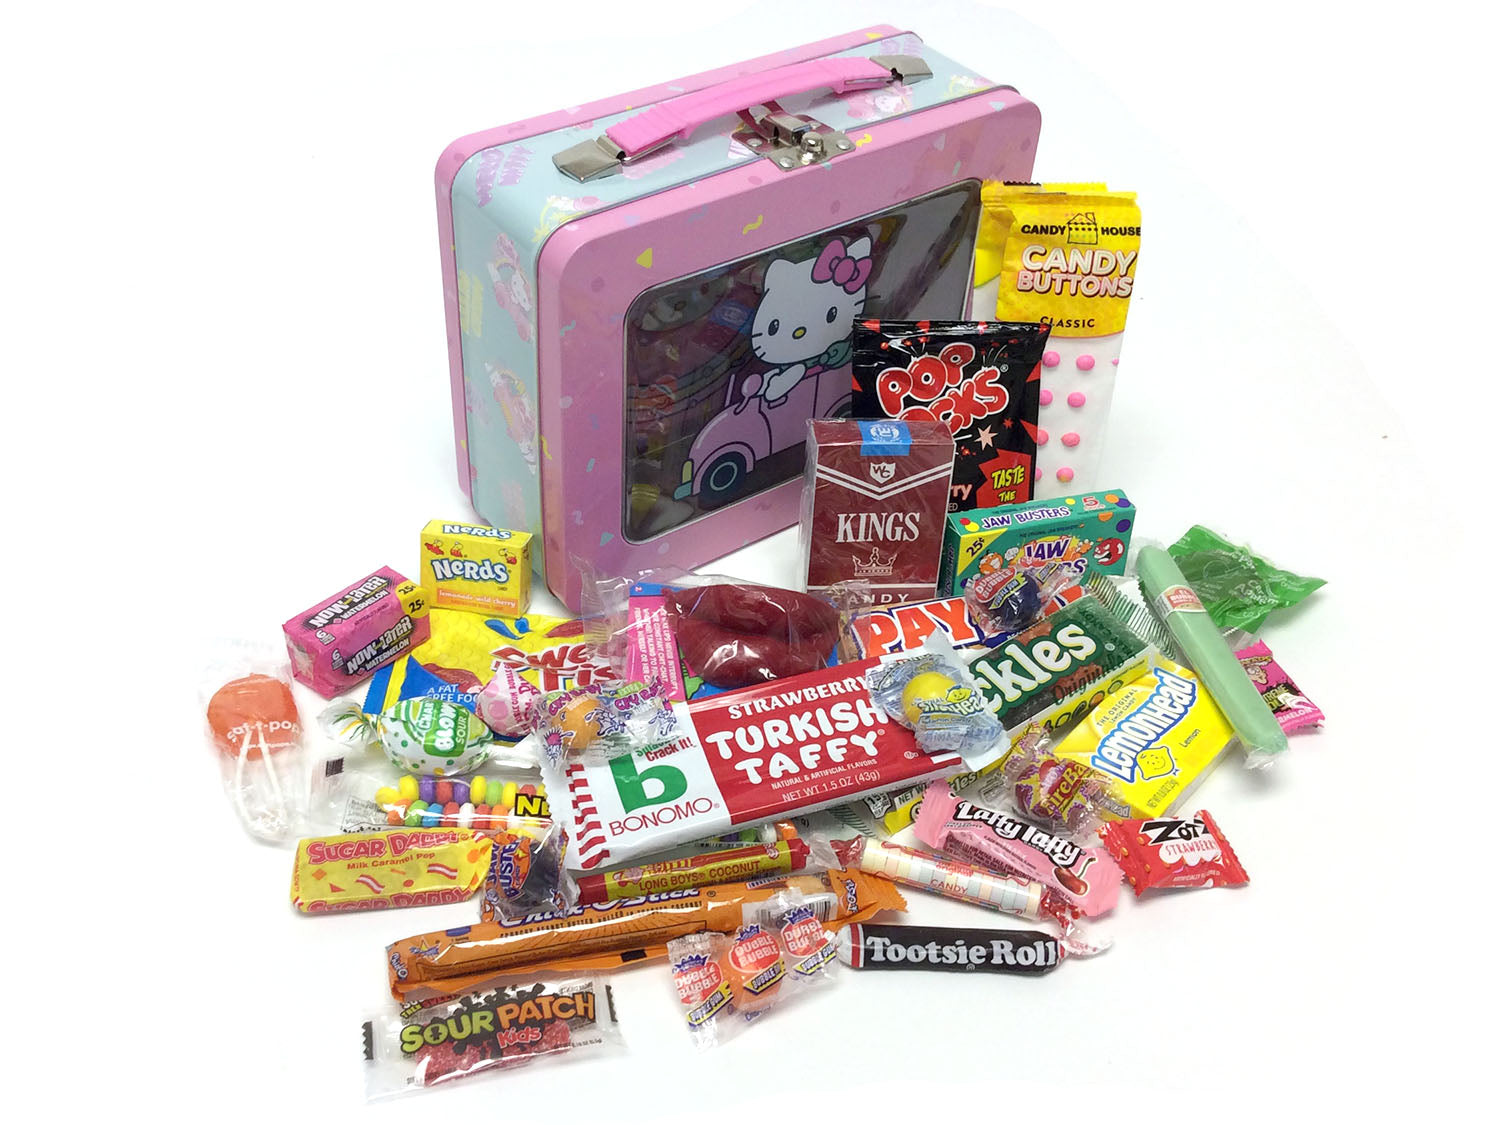 Lunch Box - Hello Kitty Beep Beep Window Box